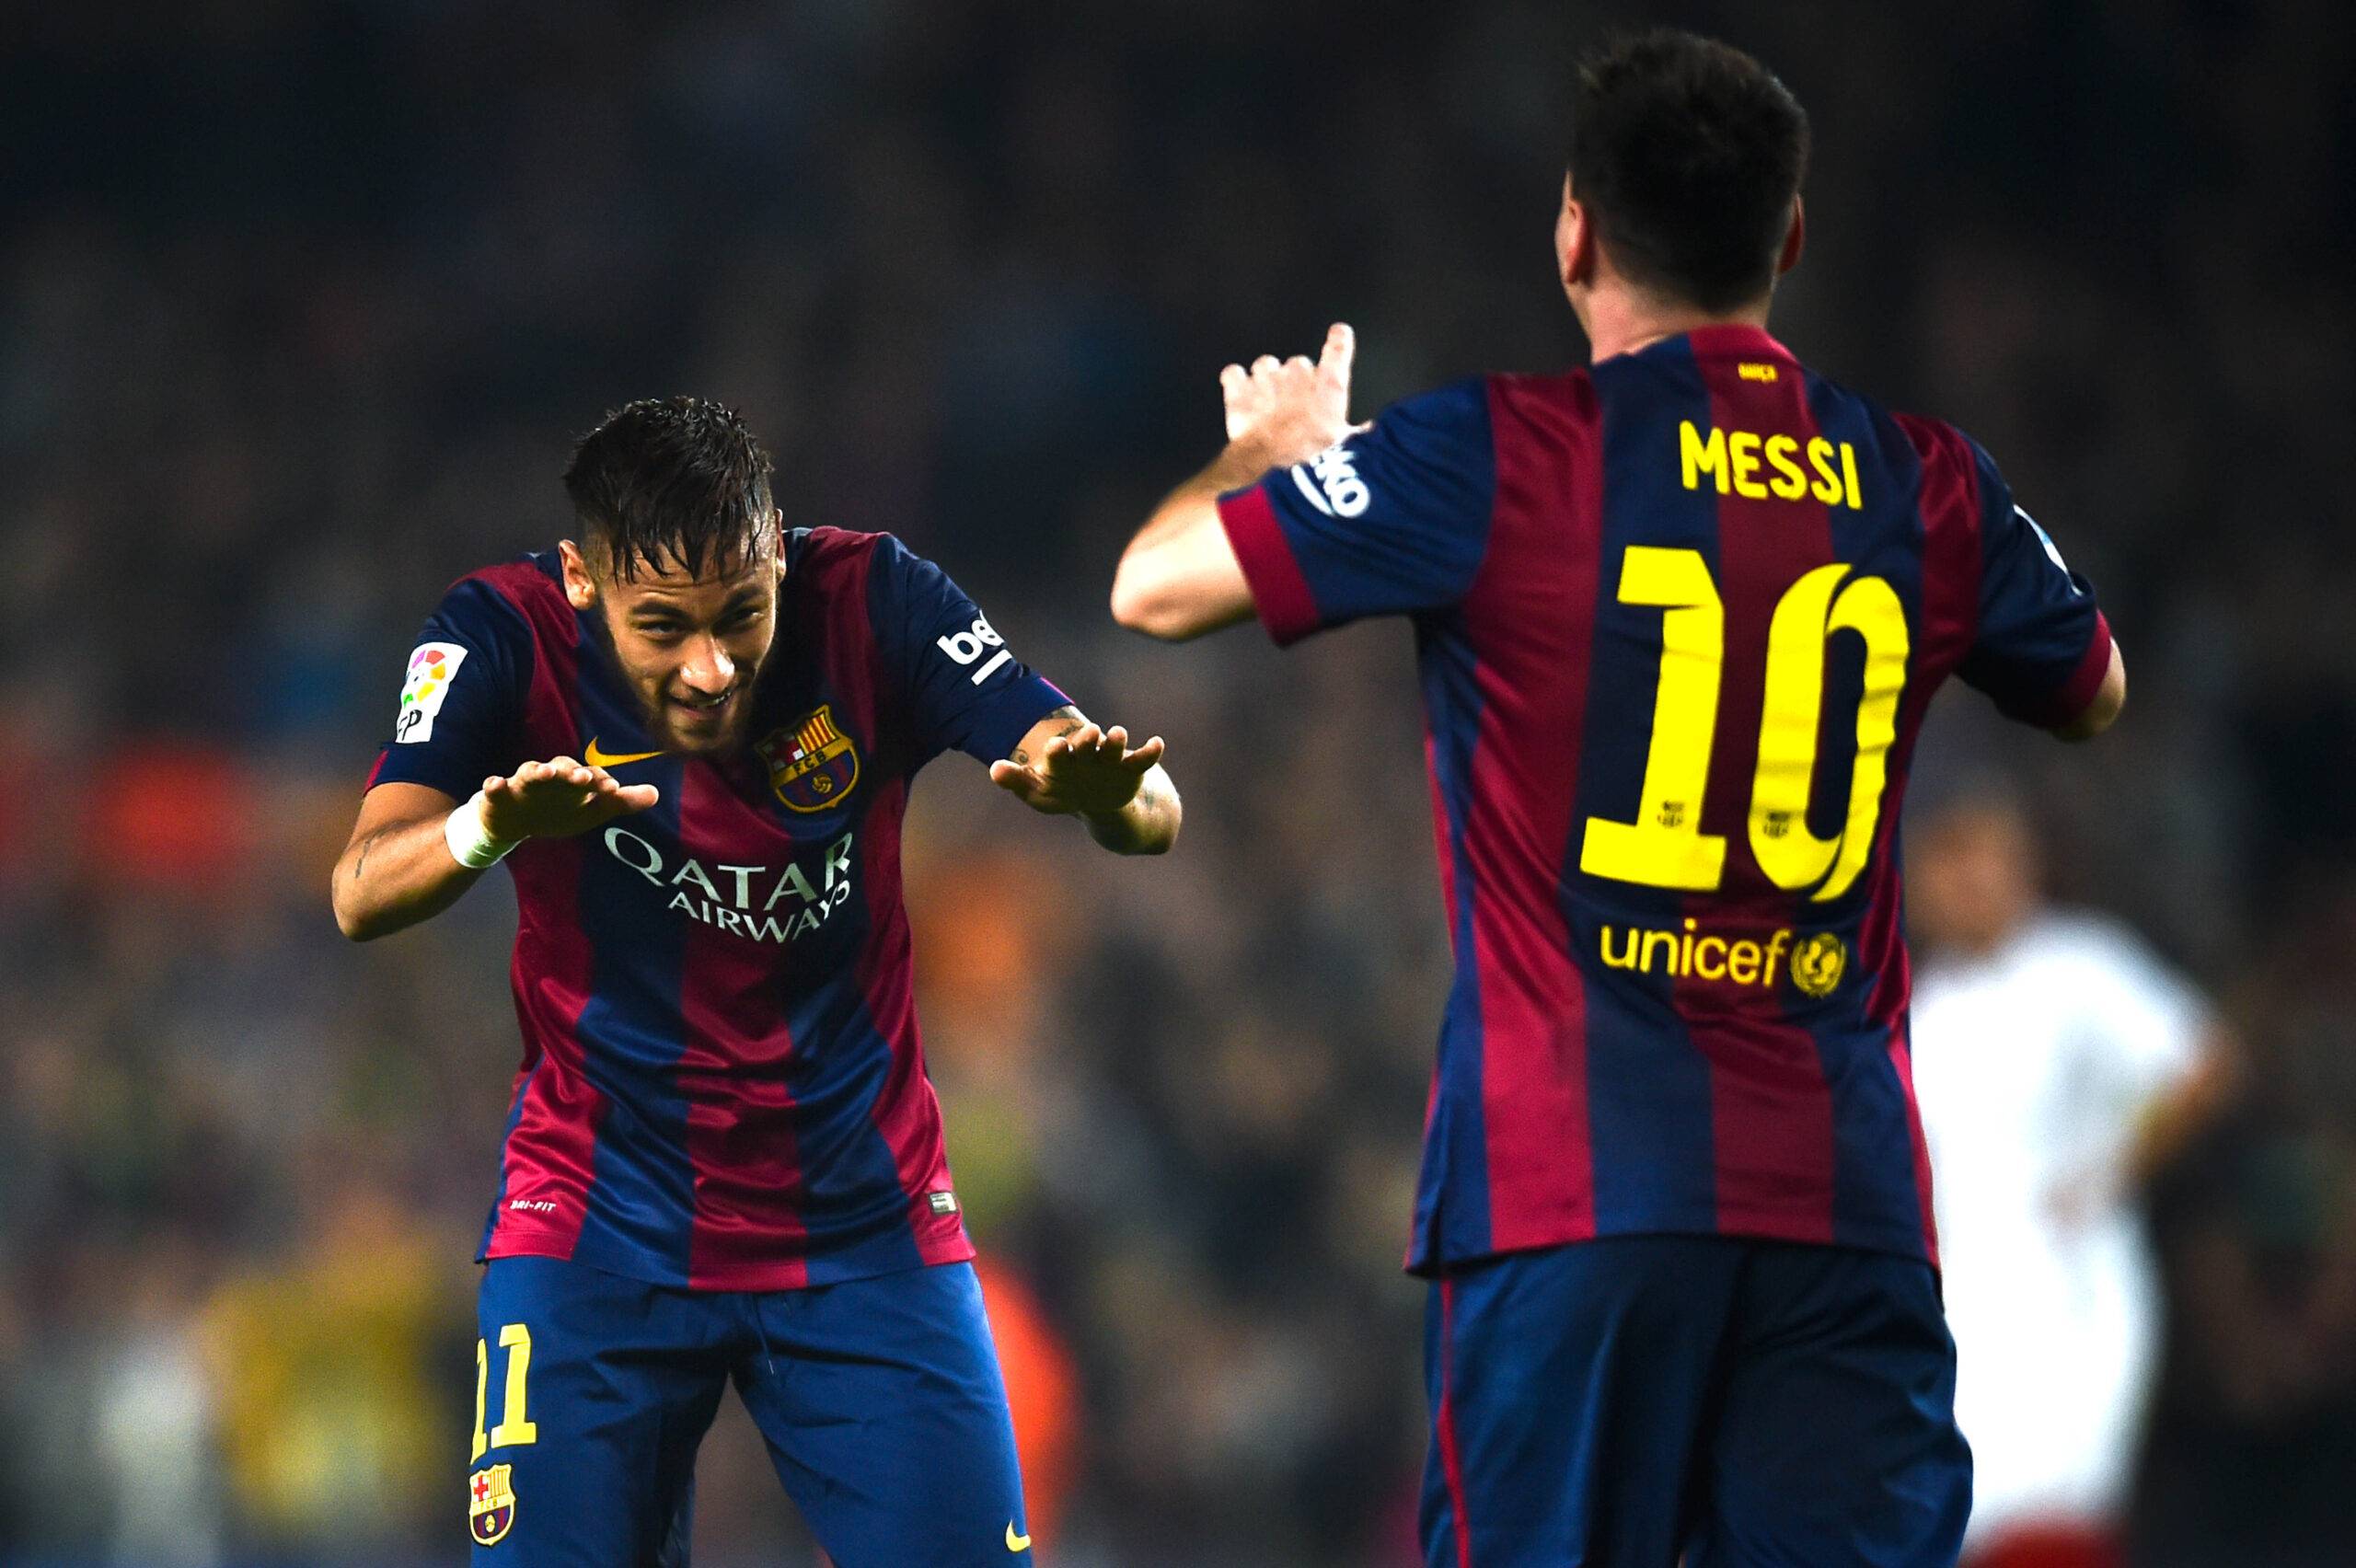 Messi and Neymar celebrate